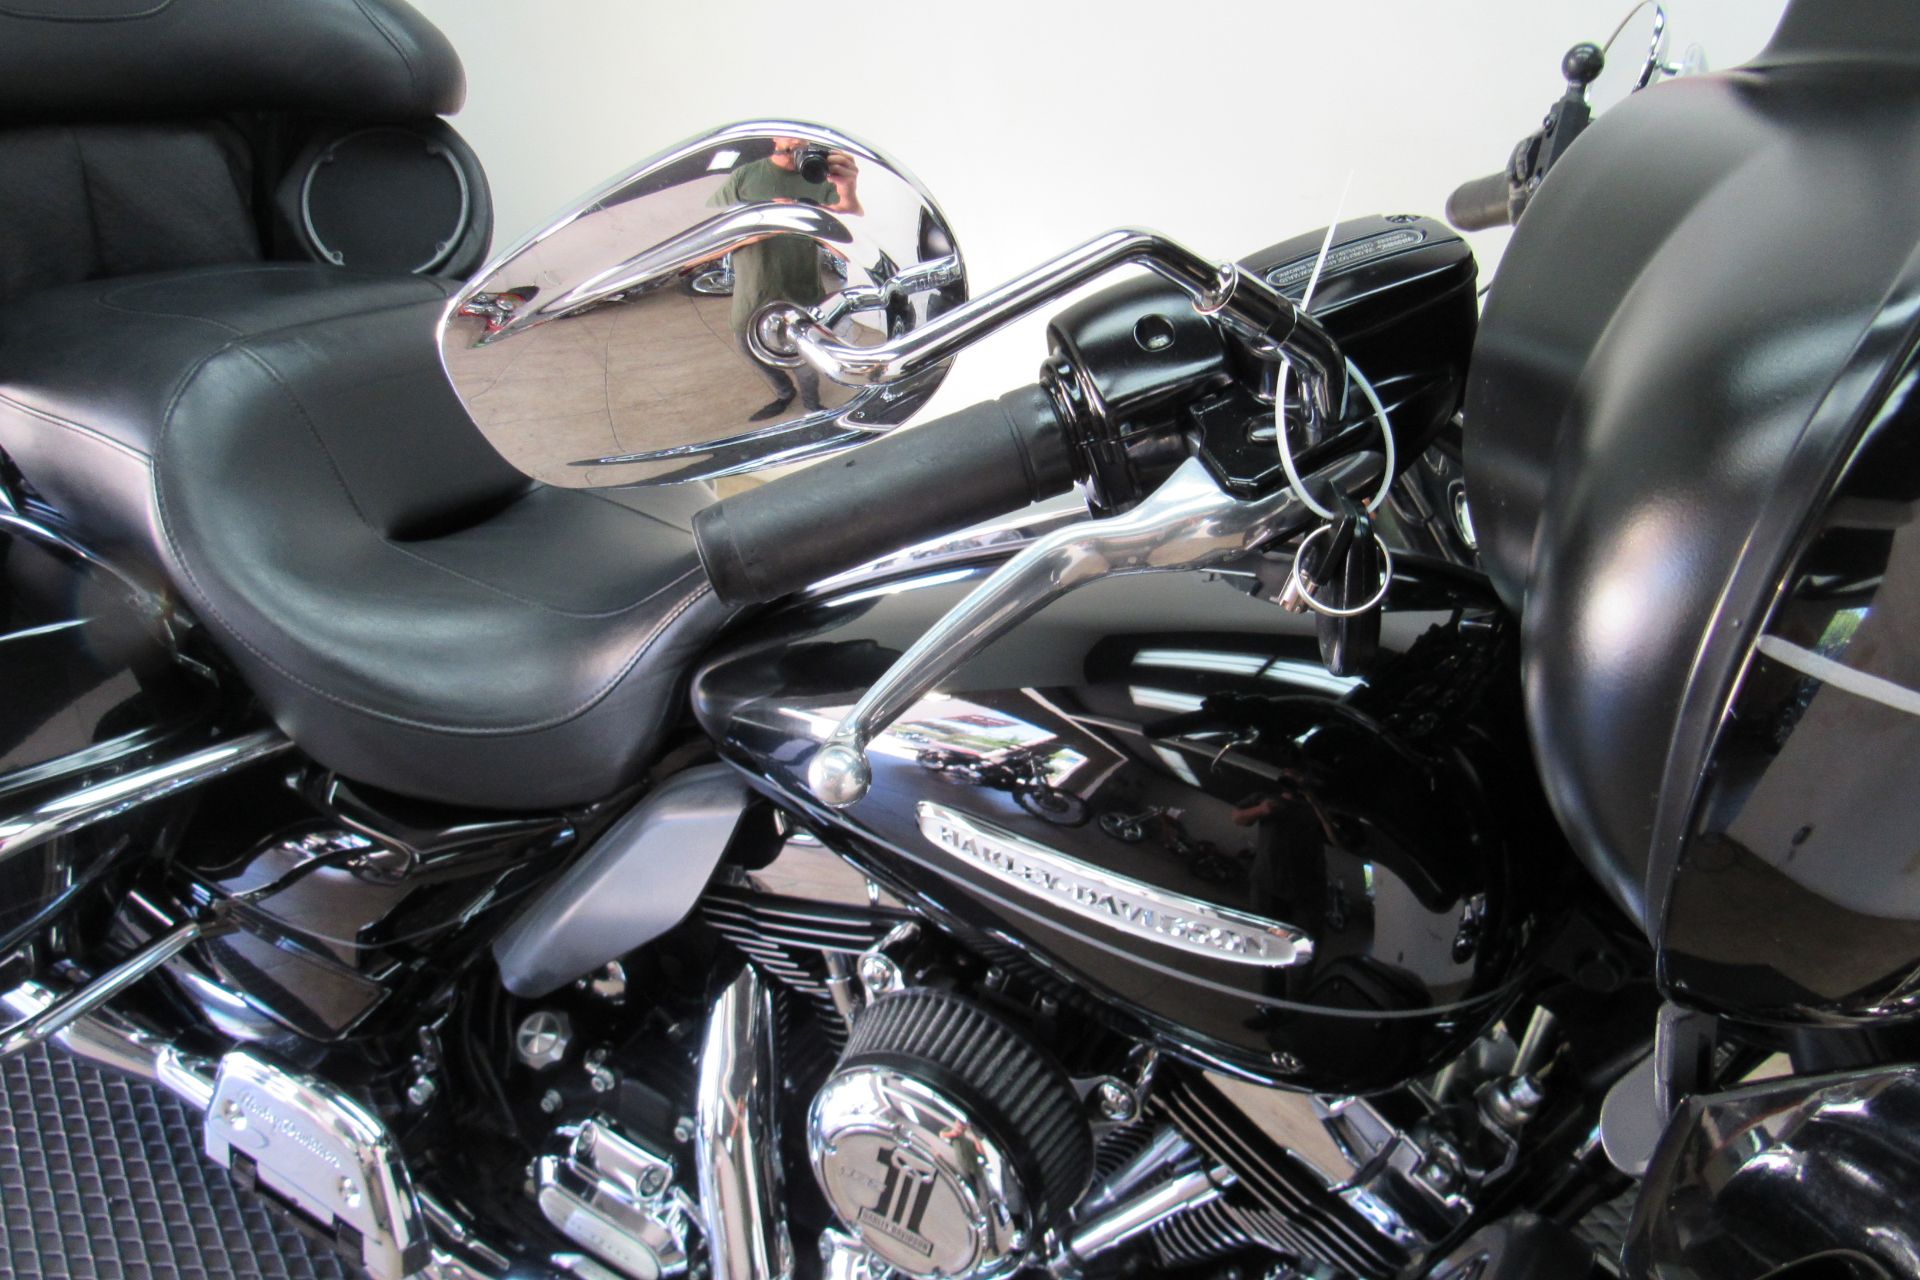 2011 Harley-Davidson Electra Glide® Ultra Limited in Temecula, California - Photo 18